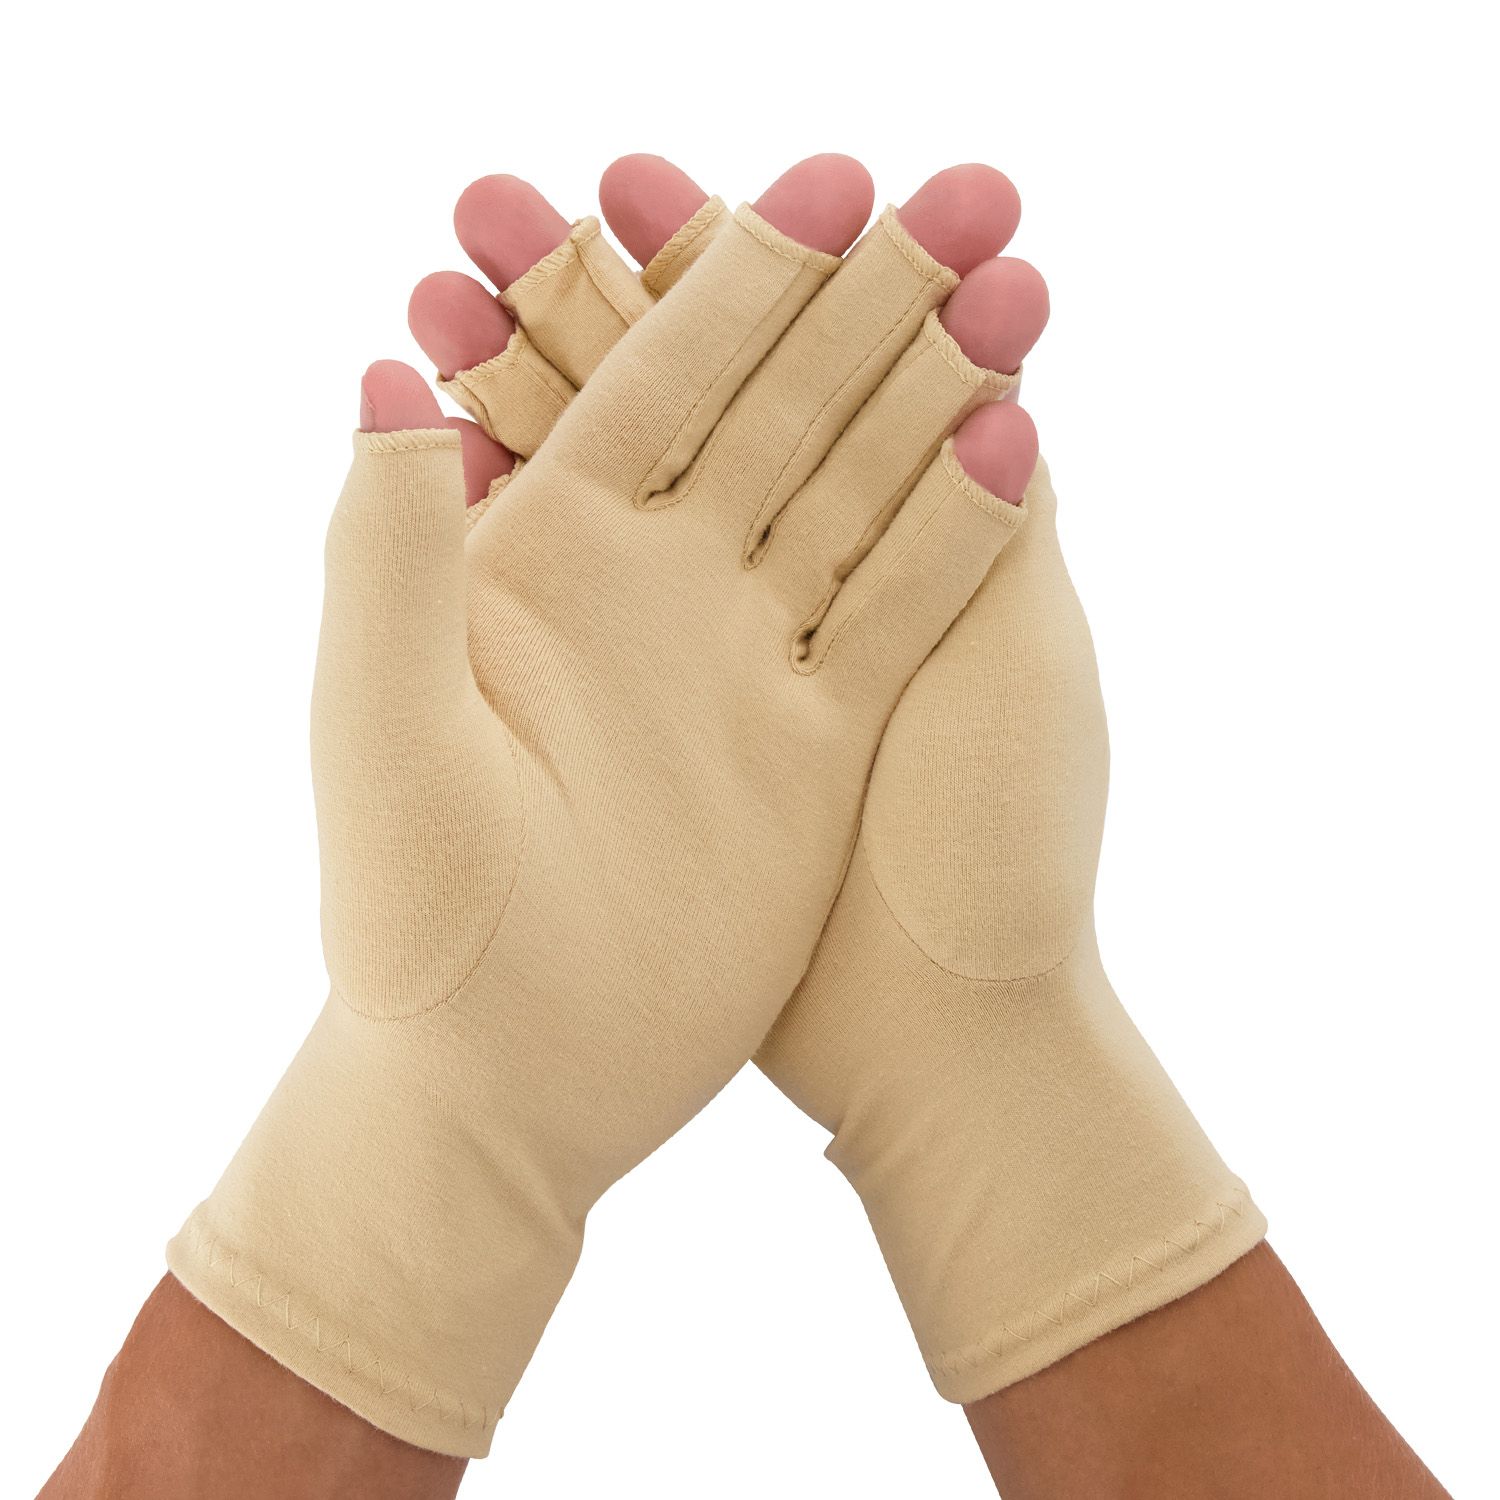 medidu rheumatoid arthritis osteoarthritis gloves worn around both hands